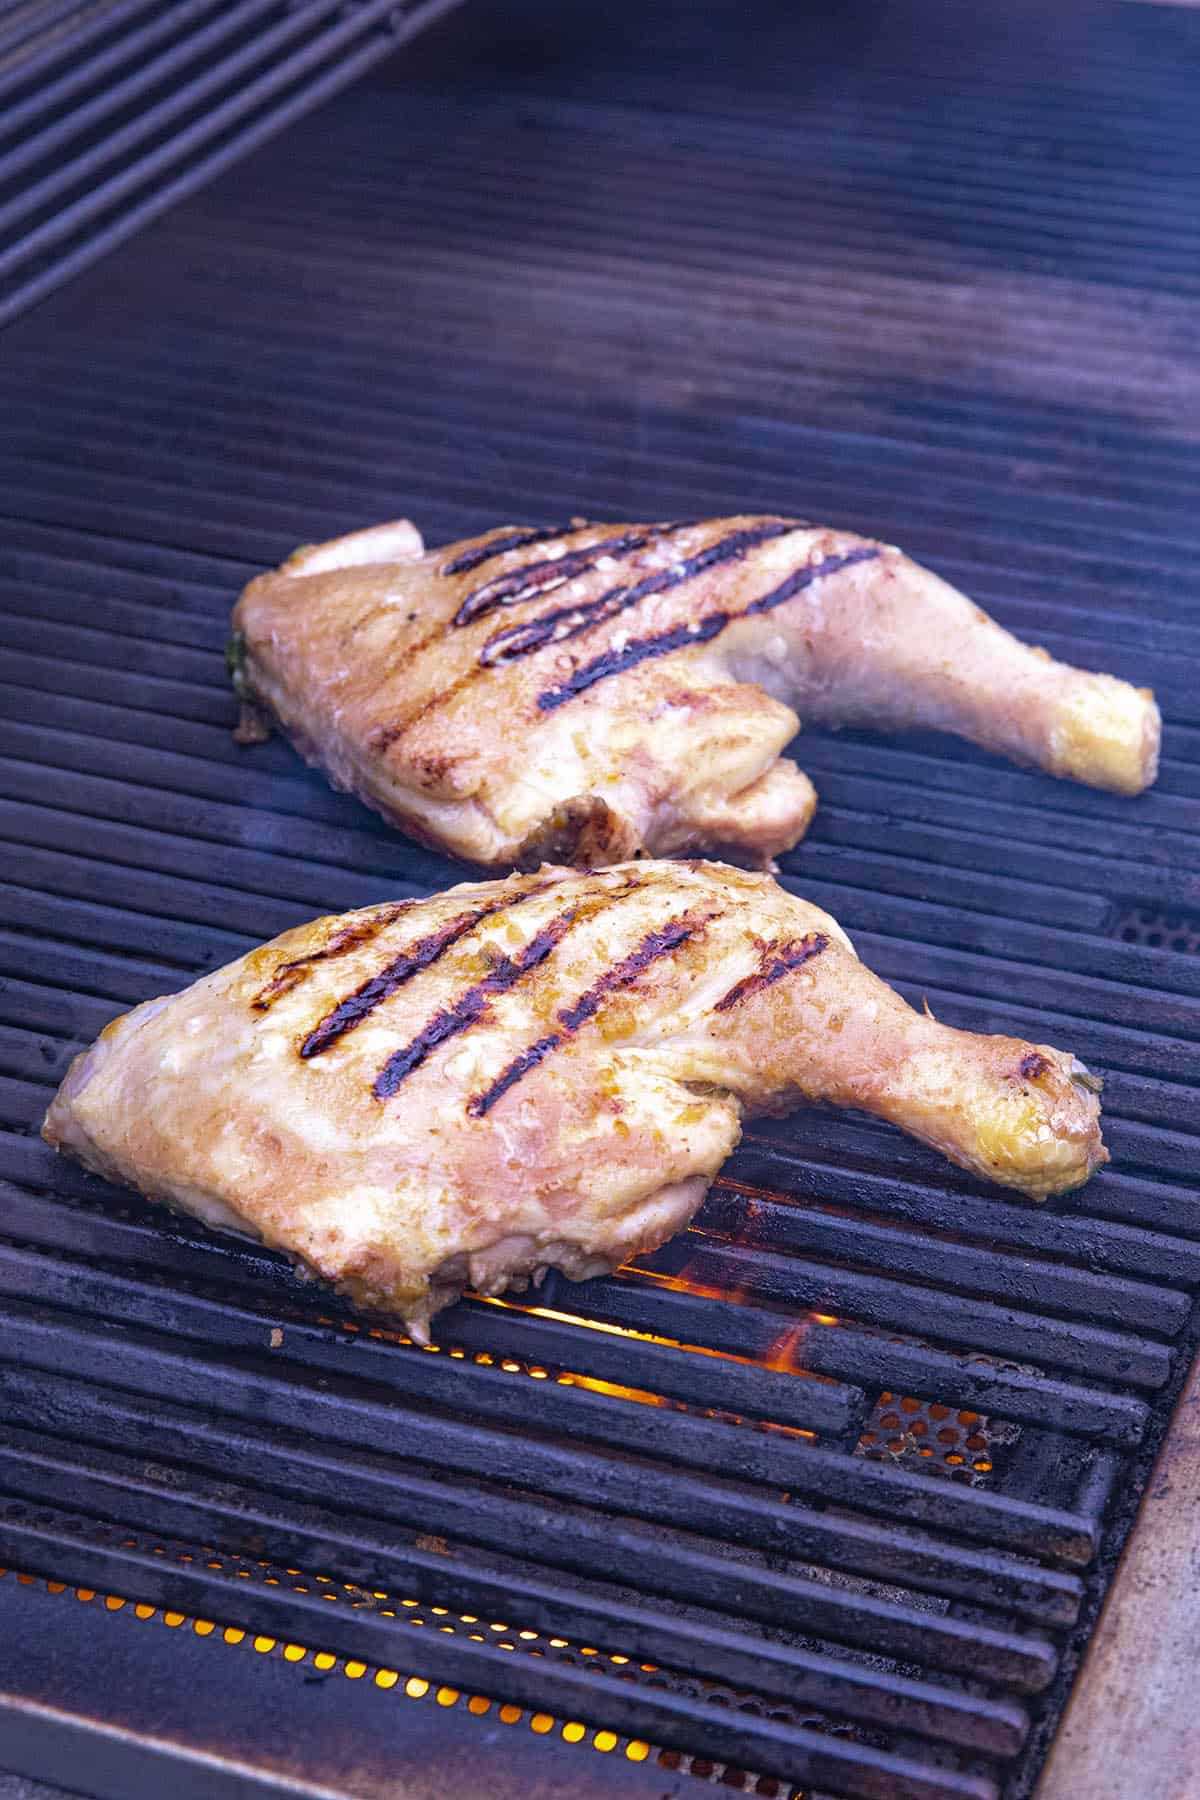 Jerk Chicken on the grill